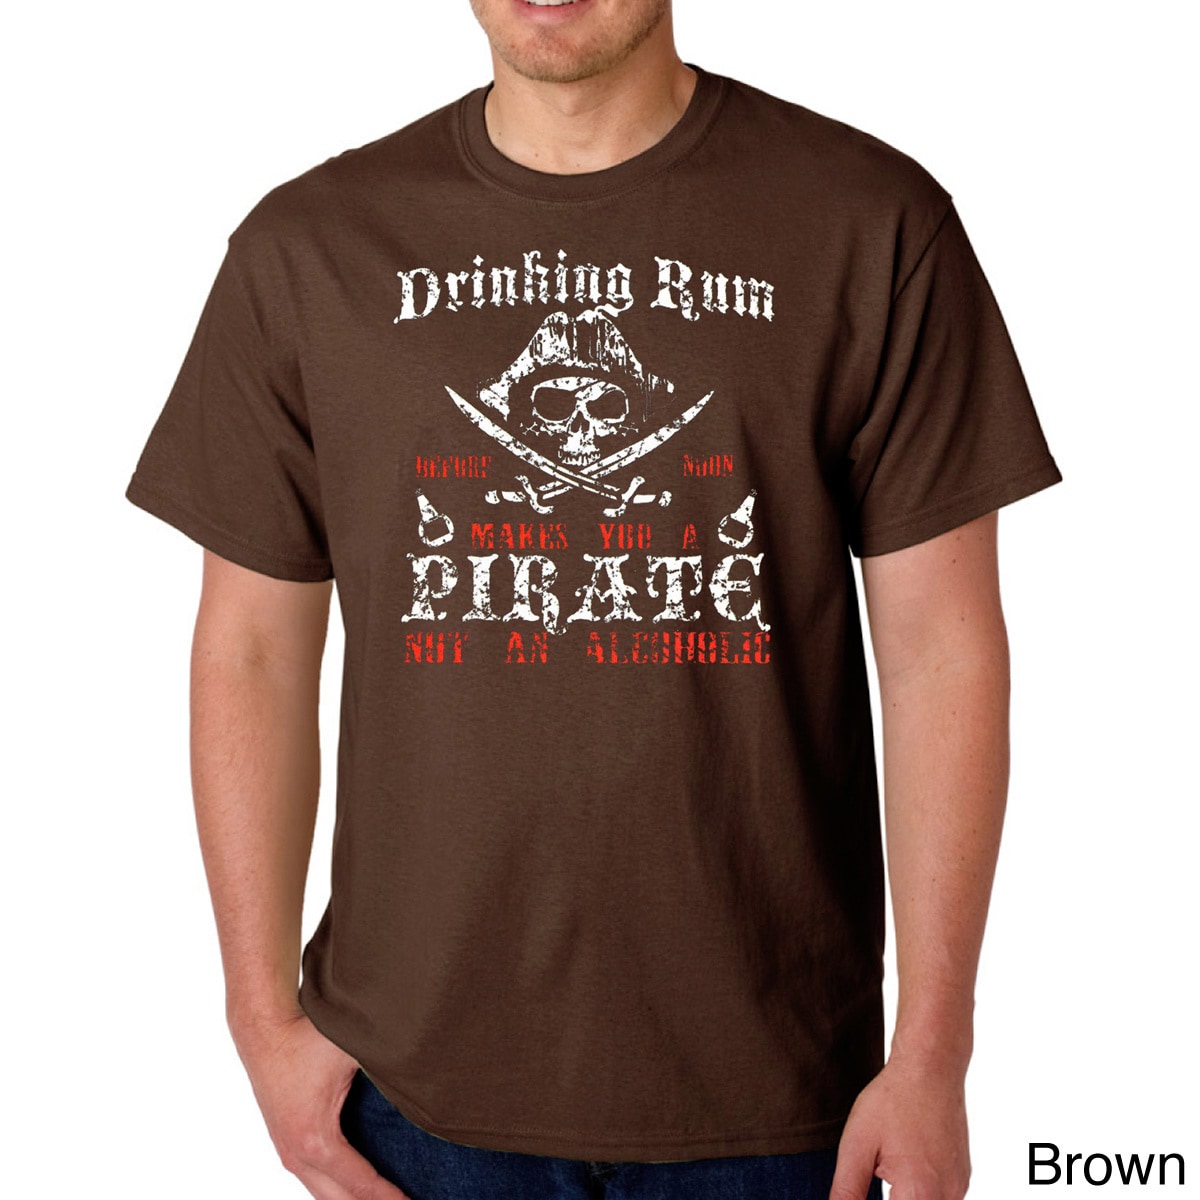 pirate tee shirt